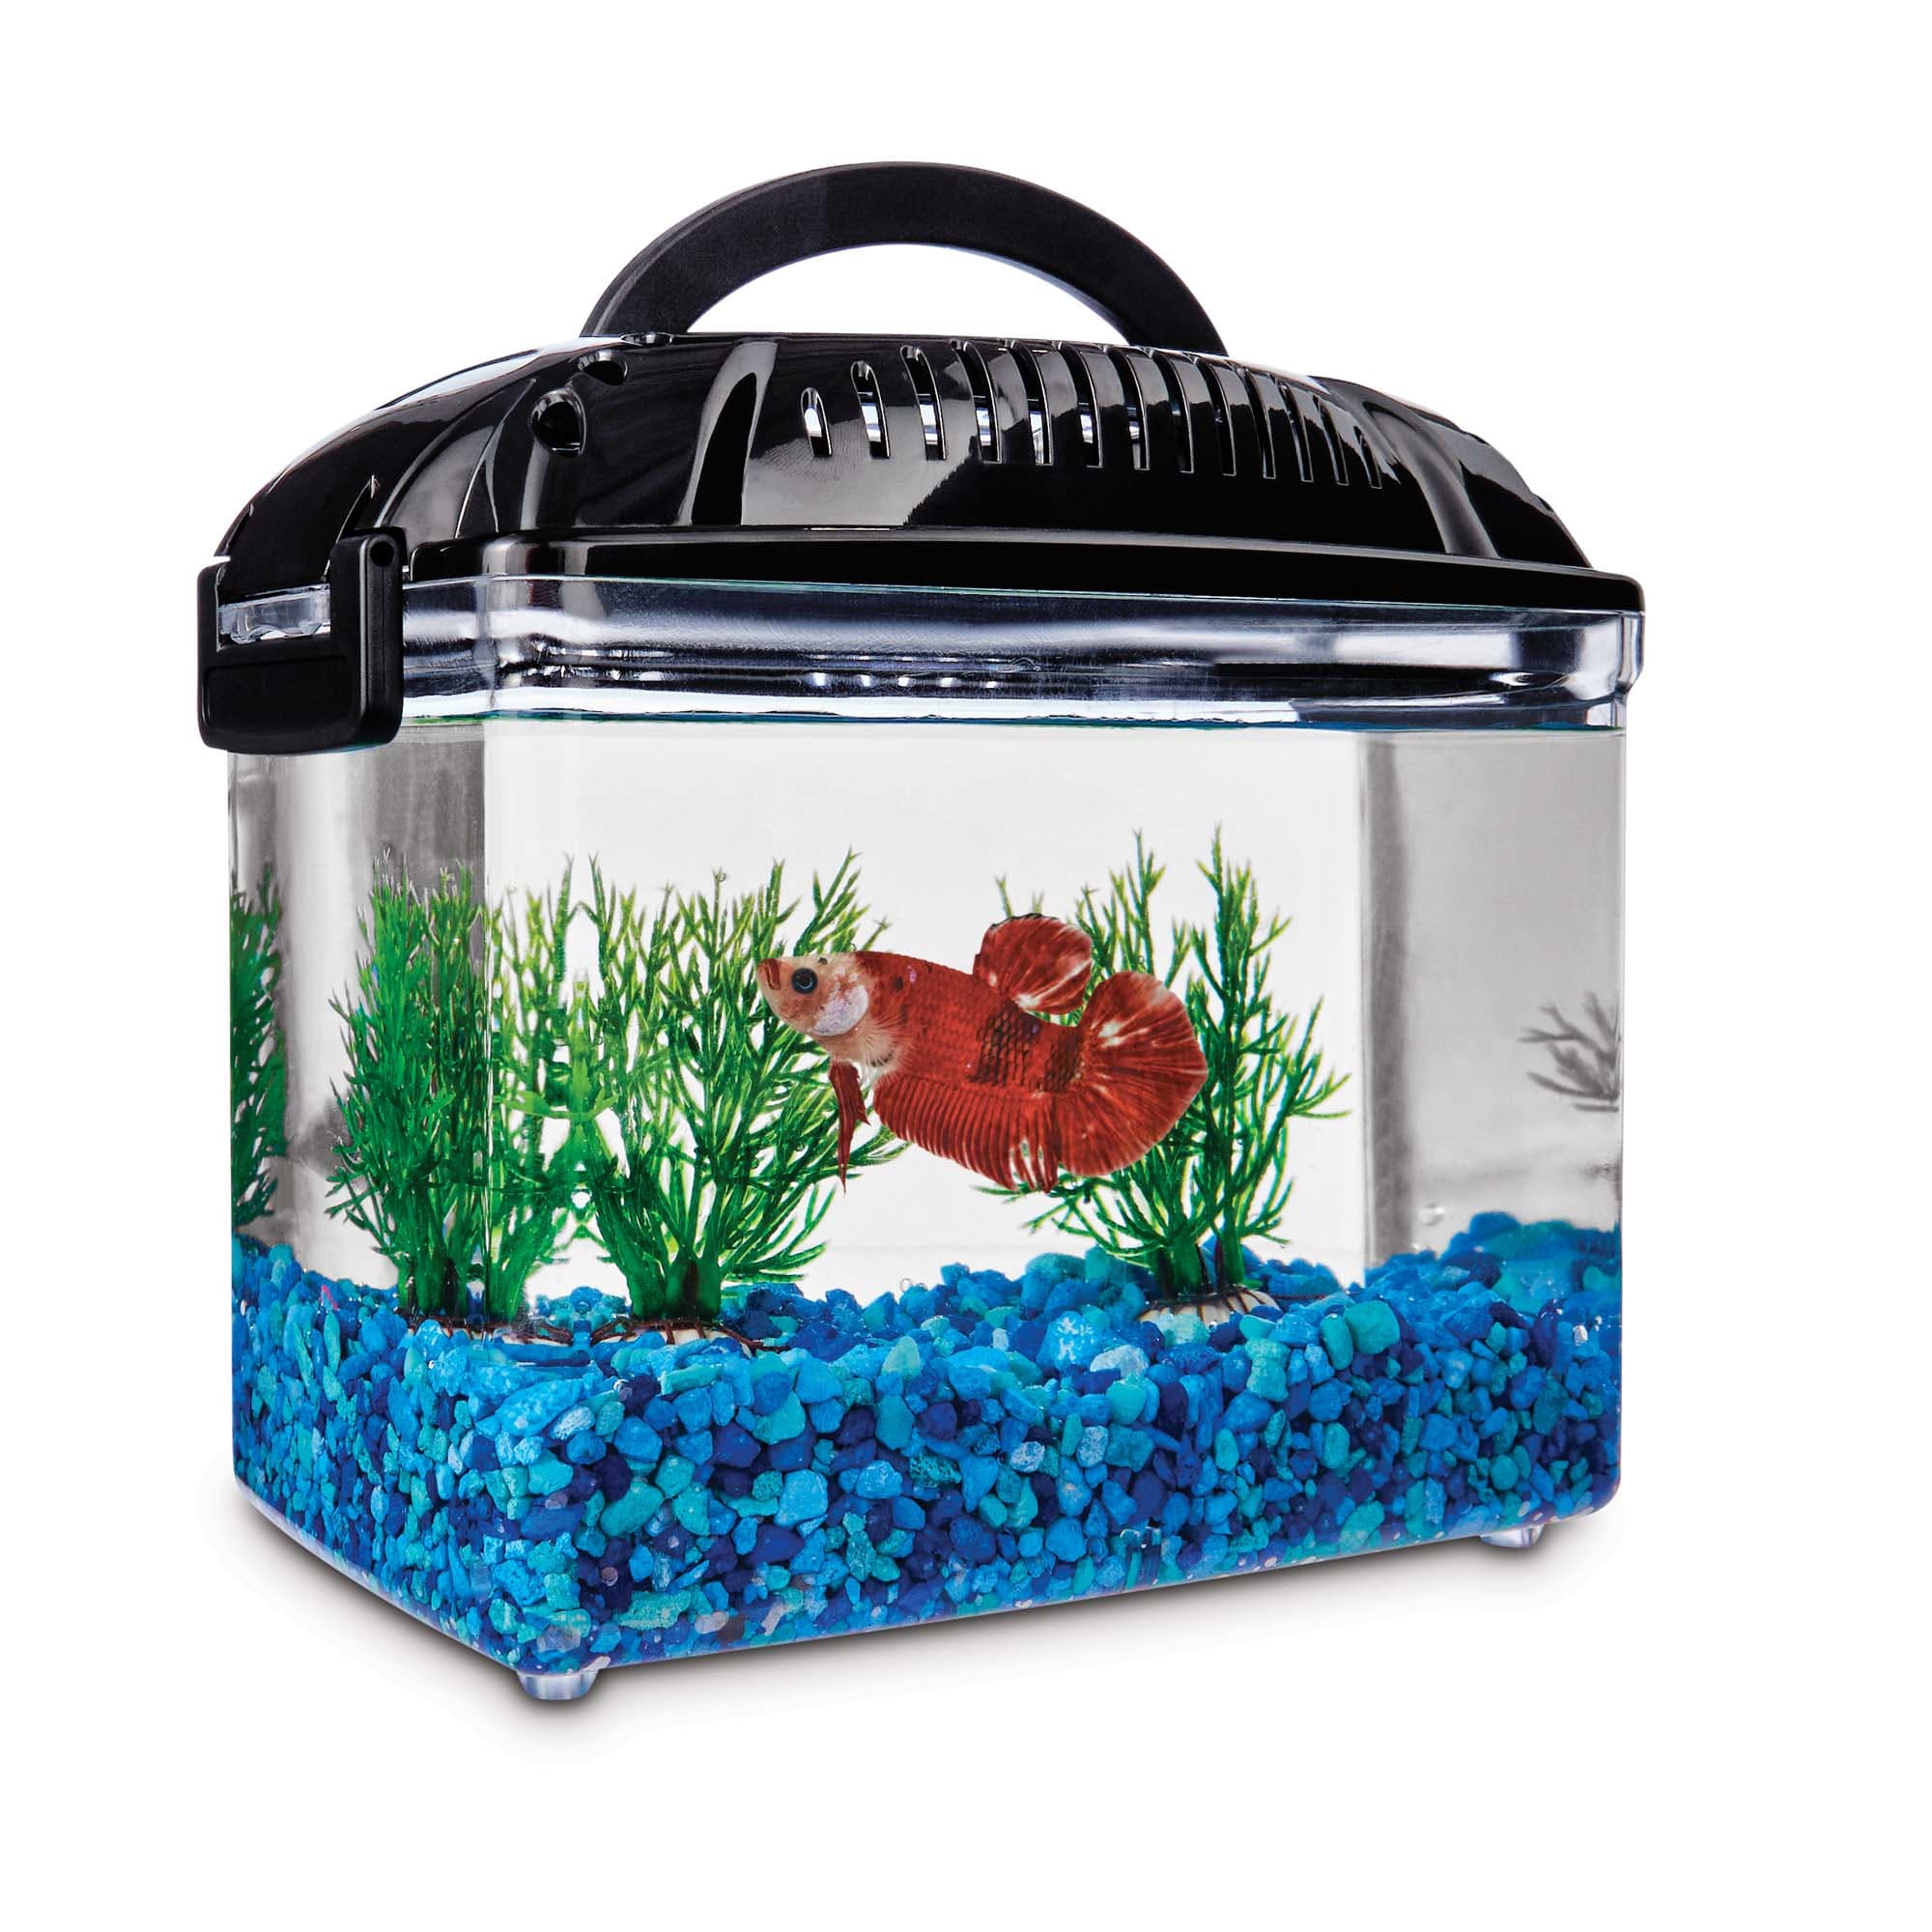 Imagitarium Betta Fish Dual Habitat Tank in Black, 0.8 gal